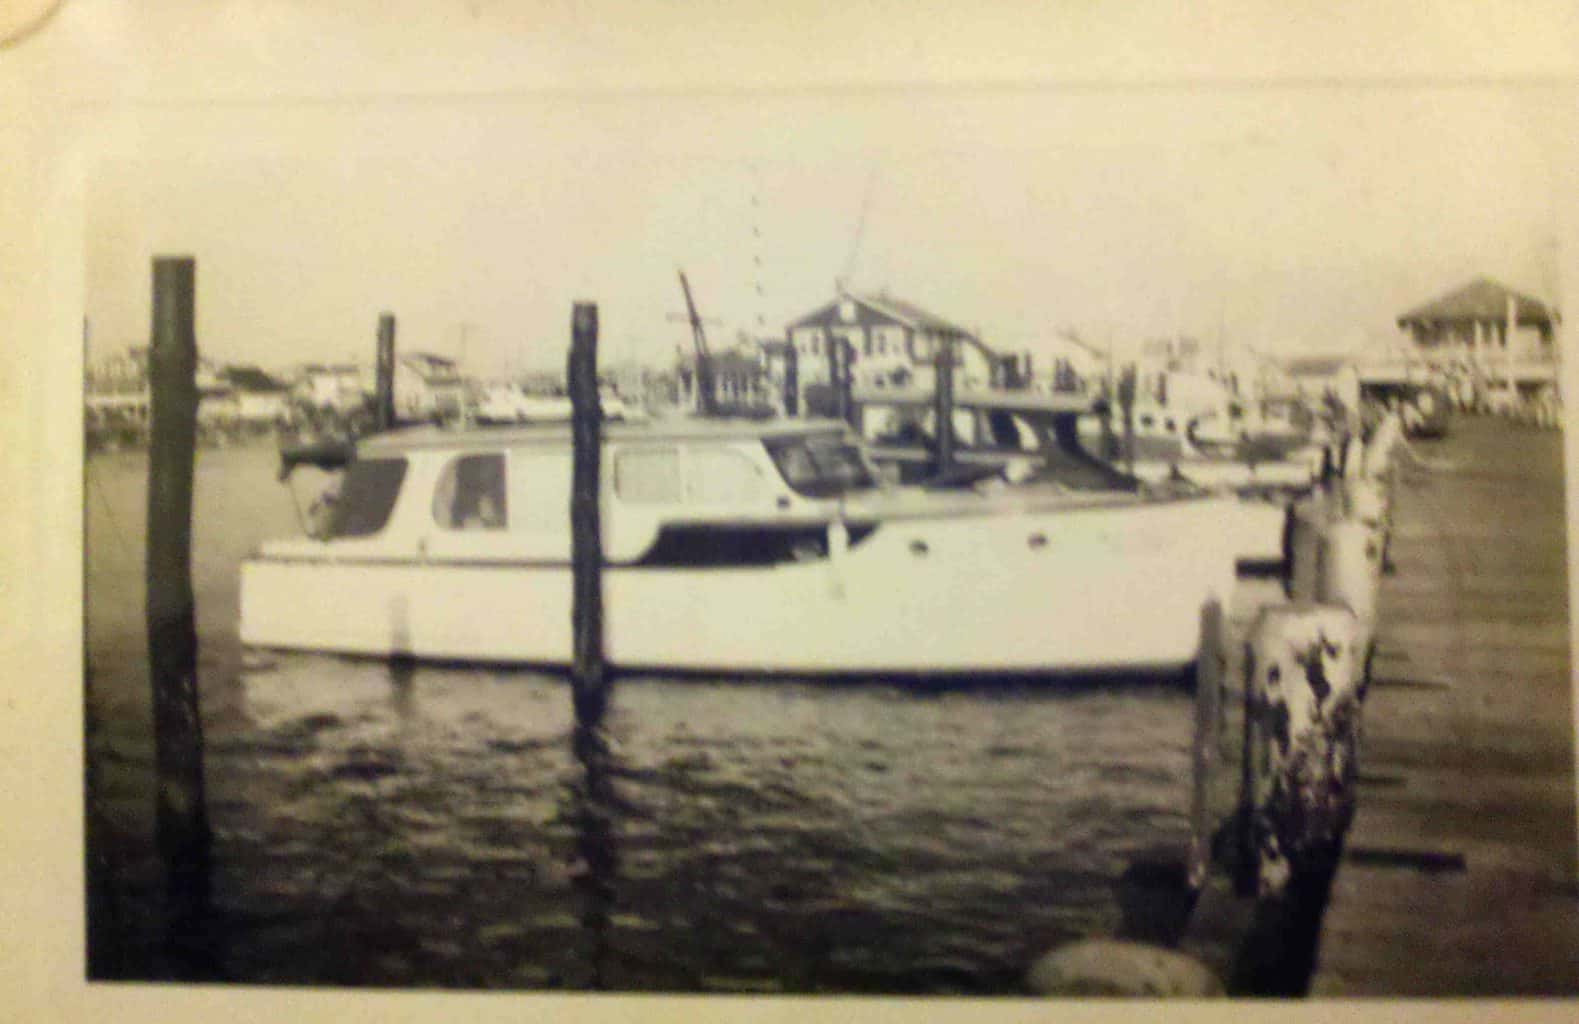 An old fishing boat - Long Beach Island